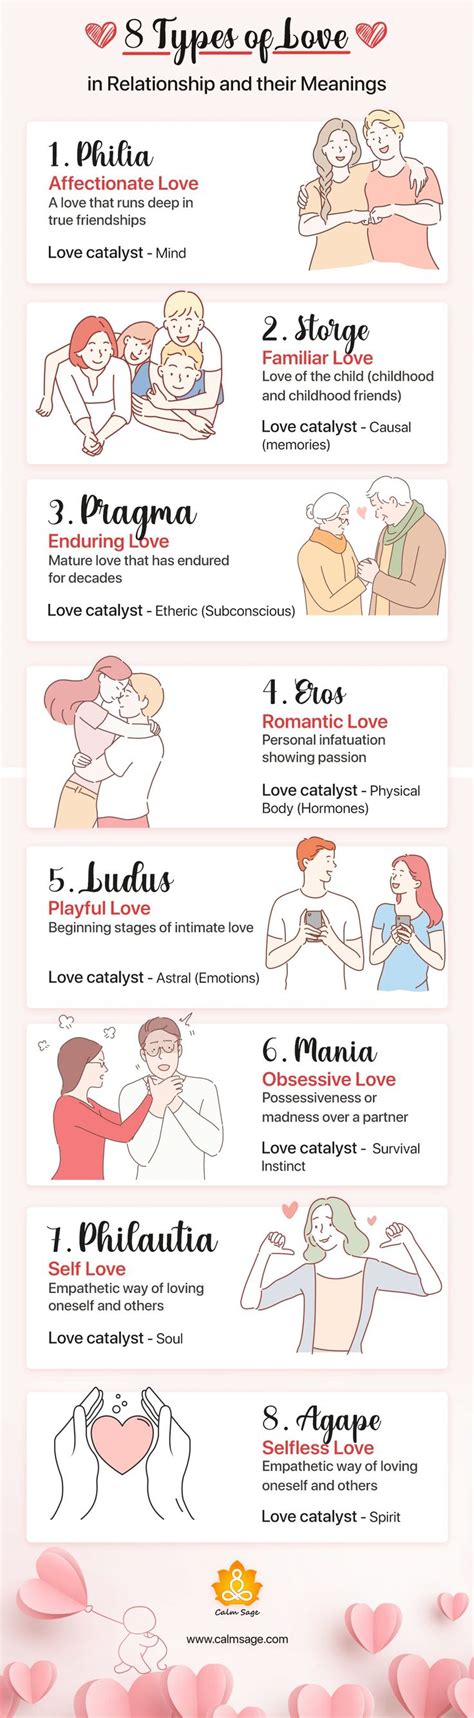 Distinct Types Of Love According To Greek Philosophy Types Of Love Greek Greek Philosophy